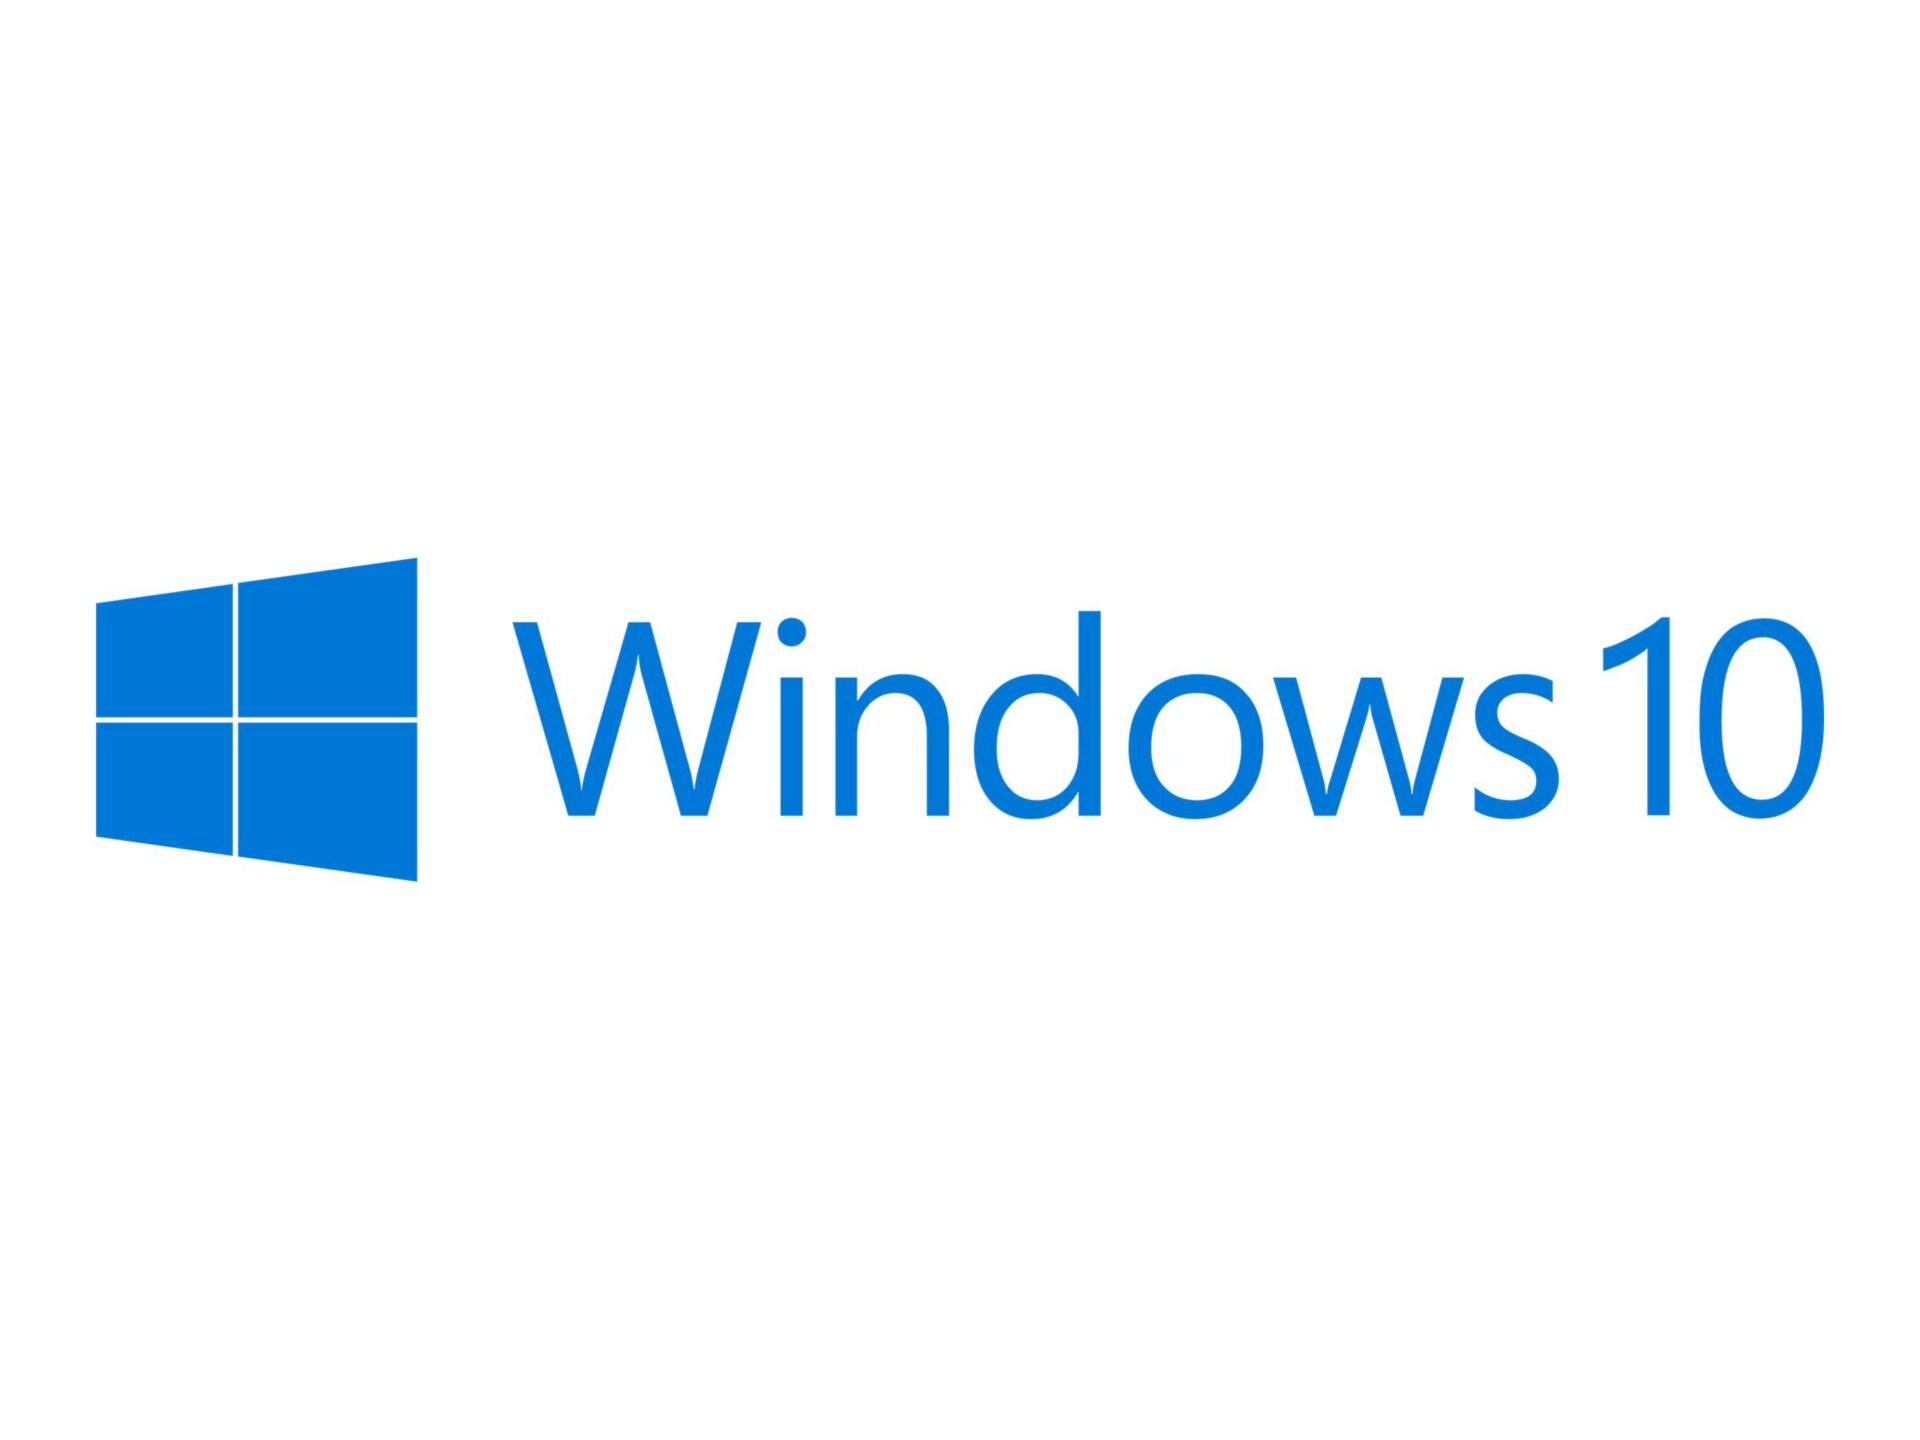 Windows 10 Pro License 1 License Fqc 08970 Operating